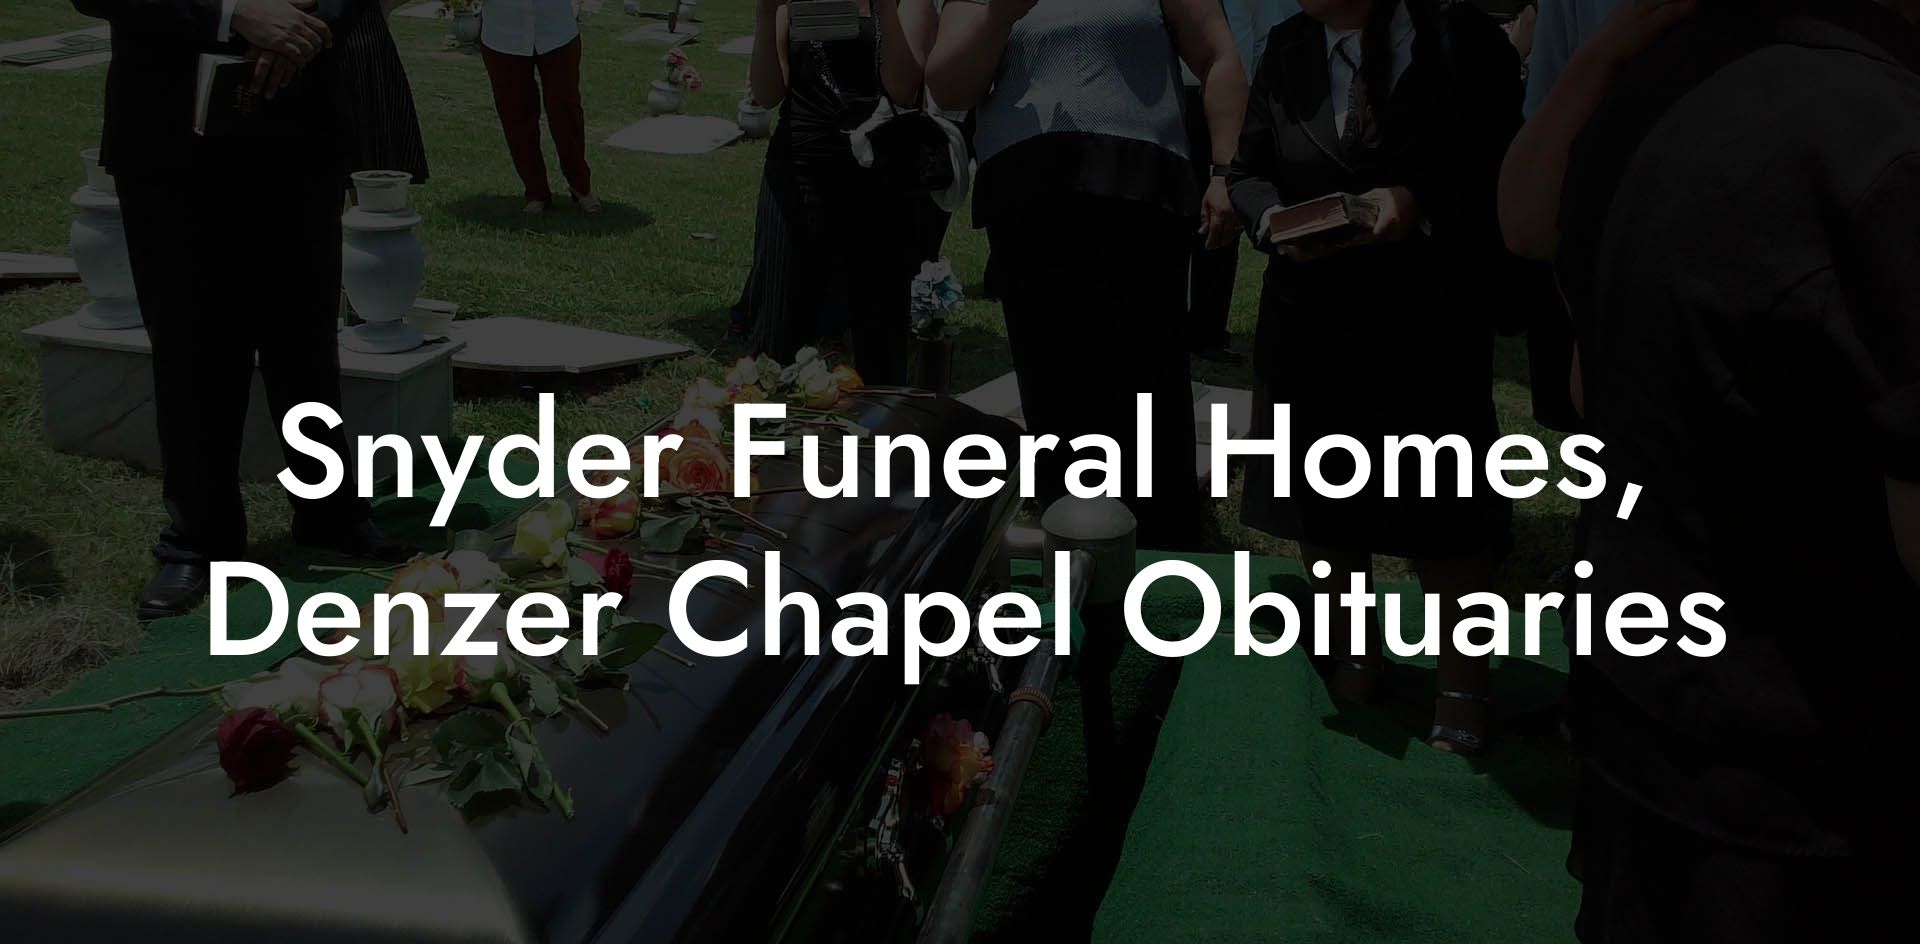 Snyder Funeral Homes, Denzer Chapel Obituaries